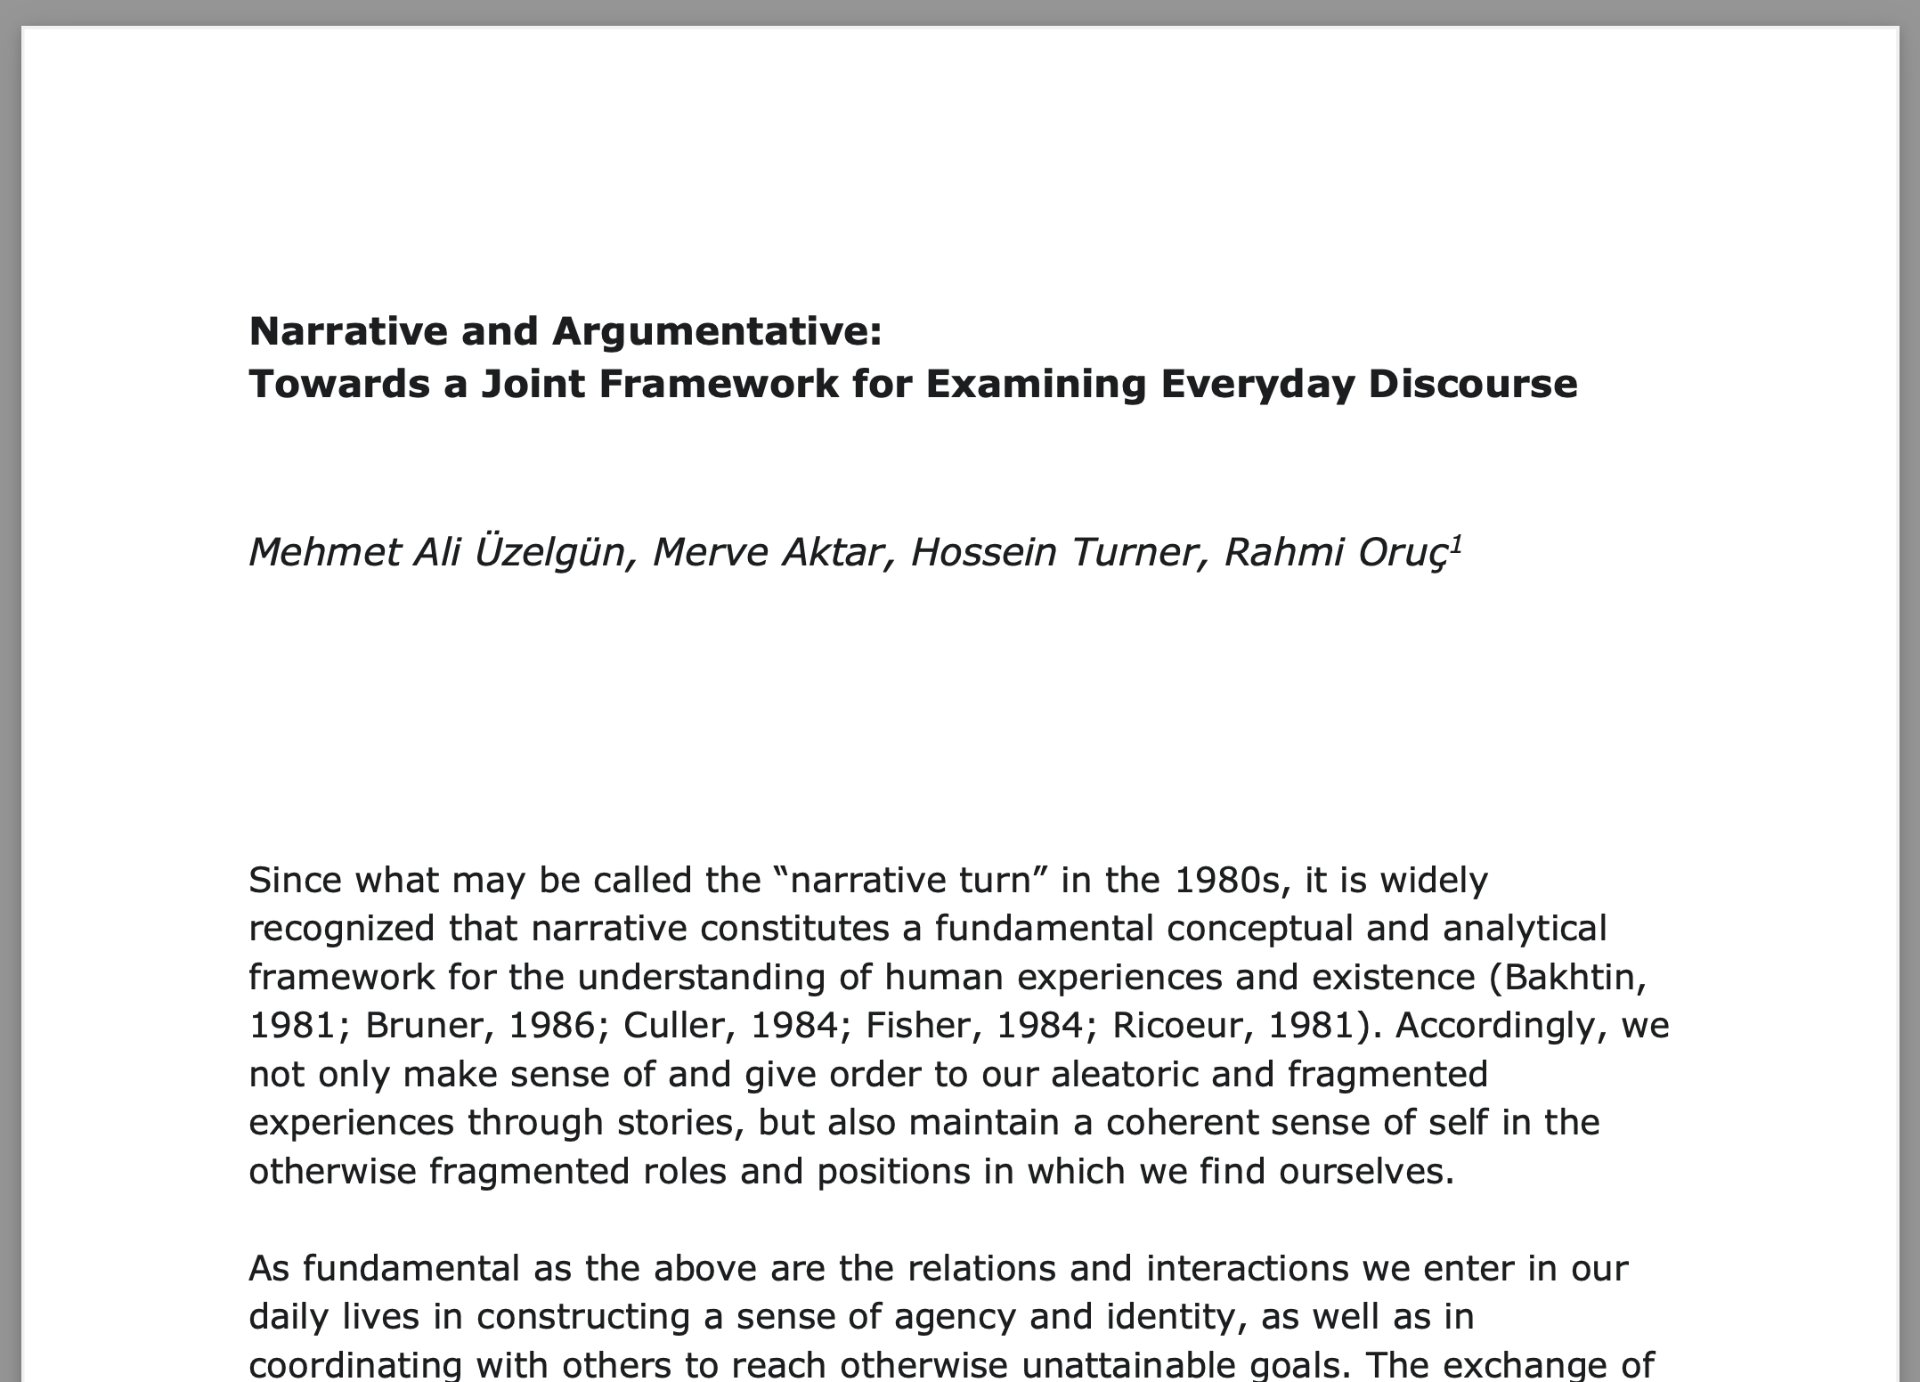 White Paper on Narrative and Argumentative Discourse